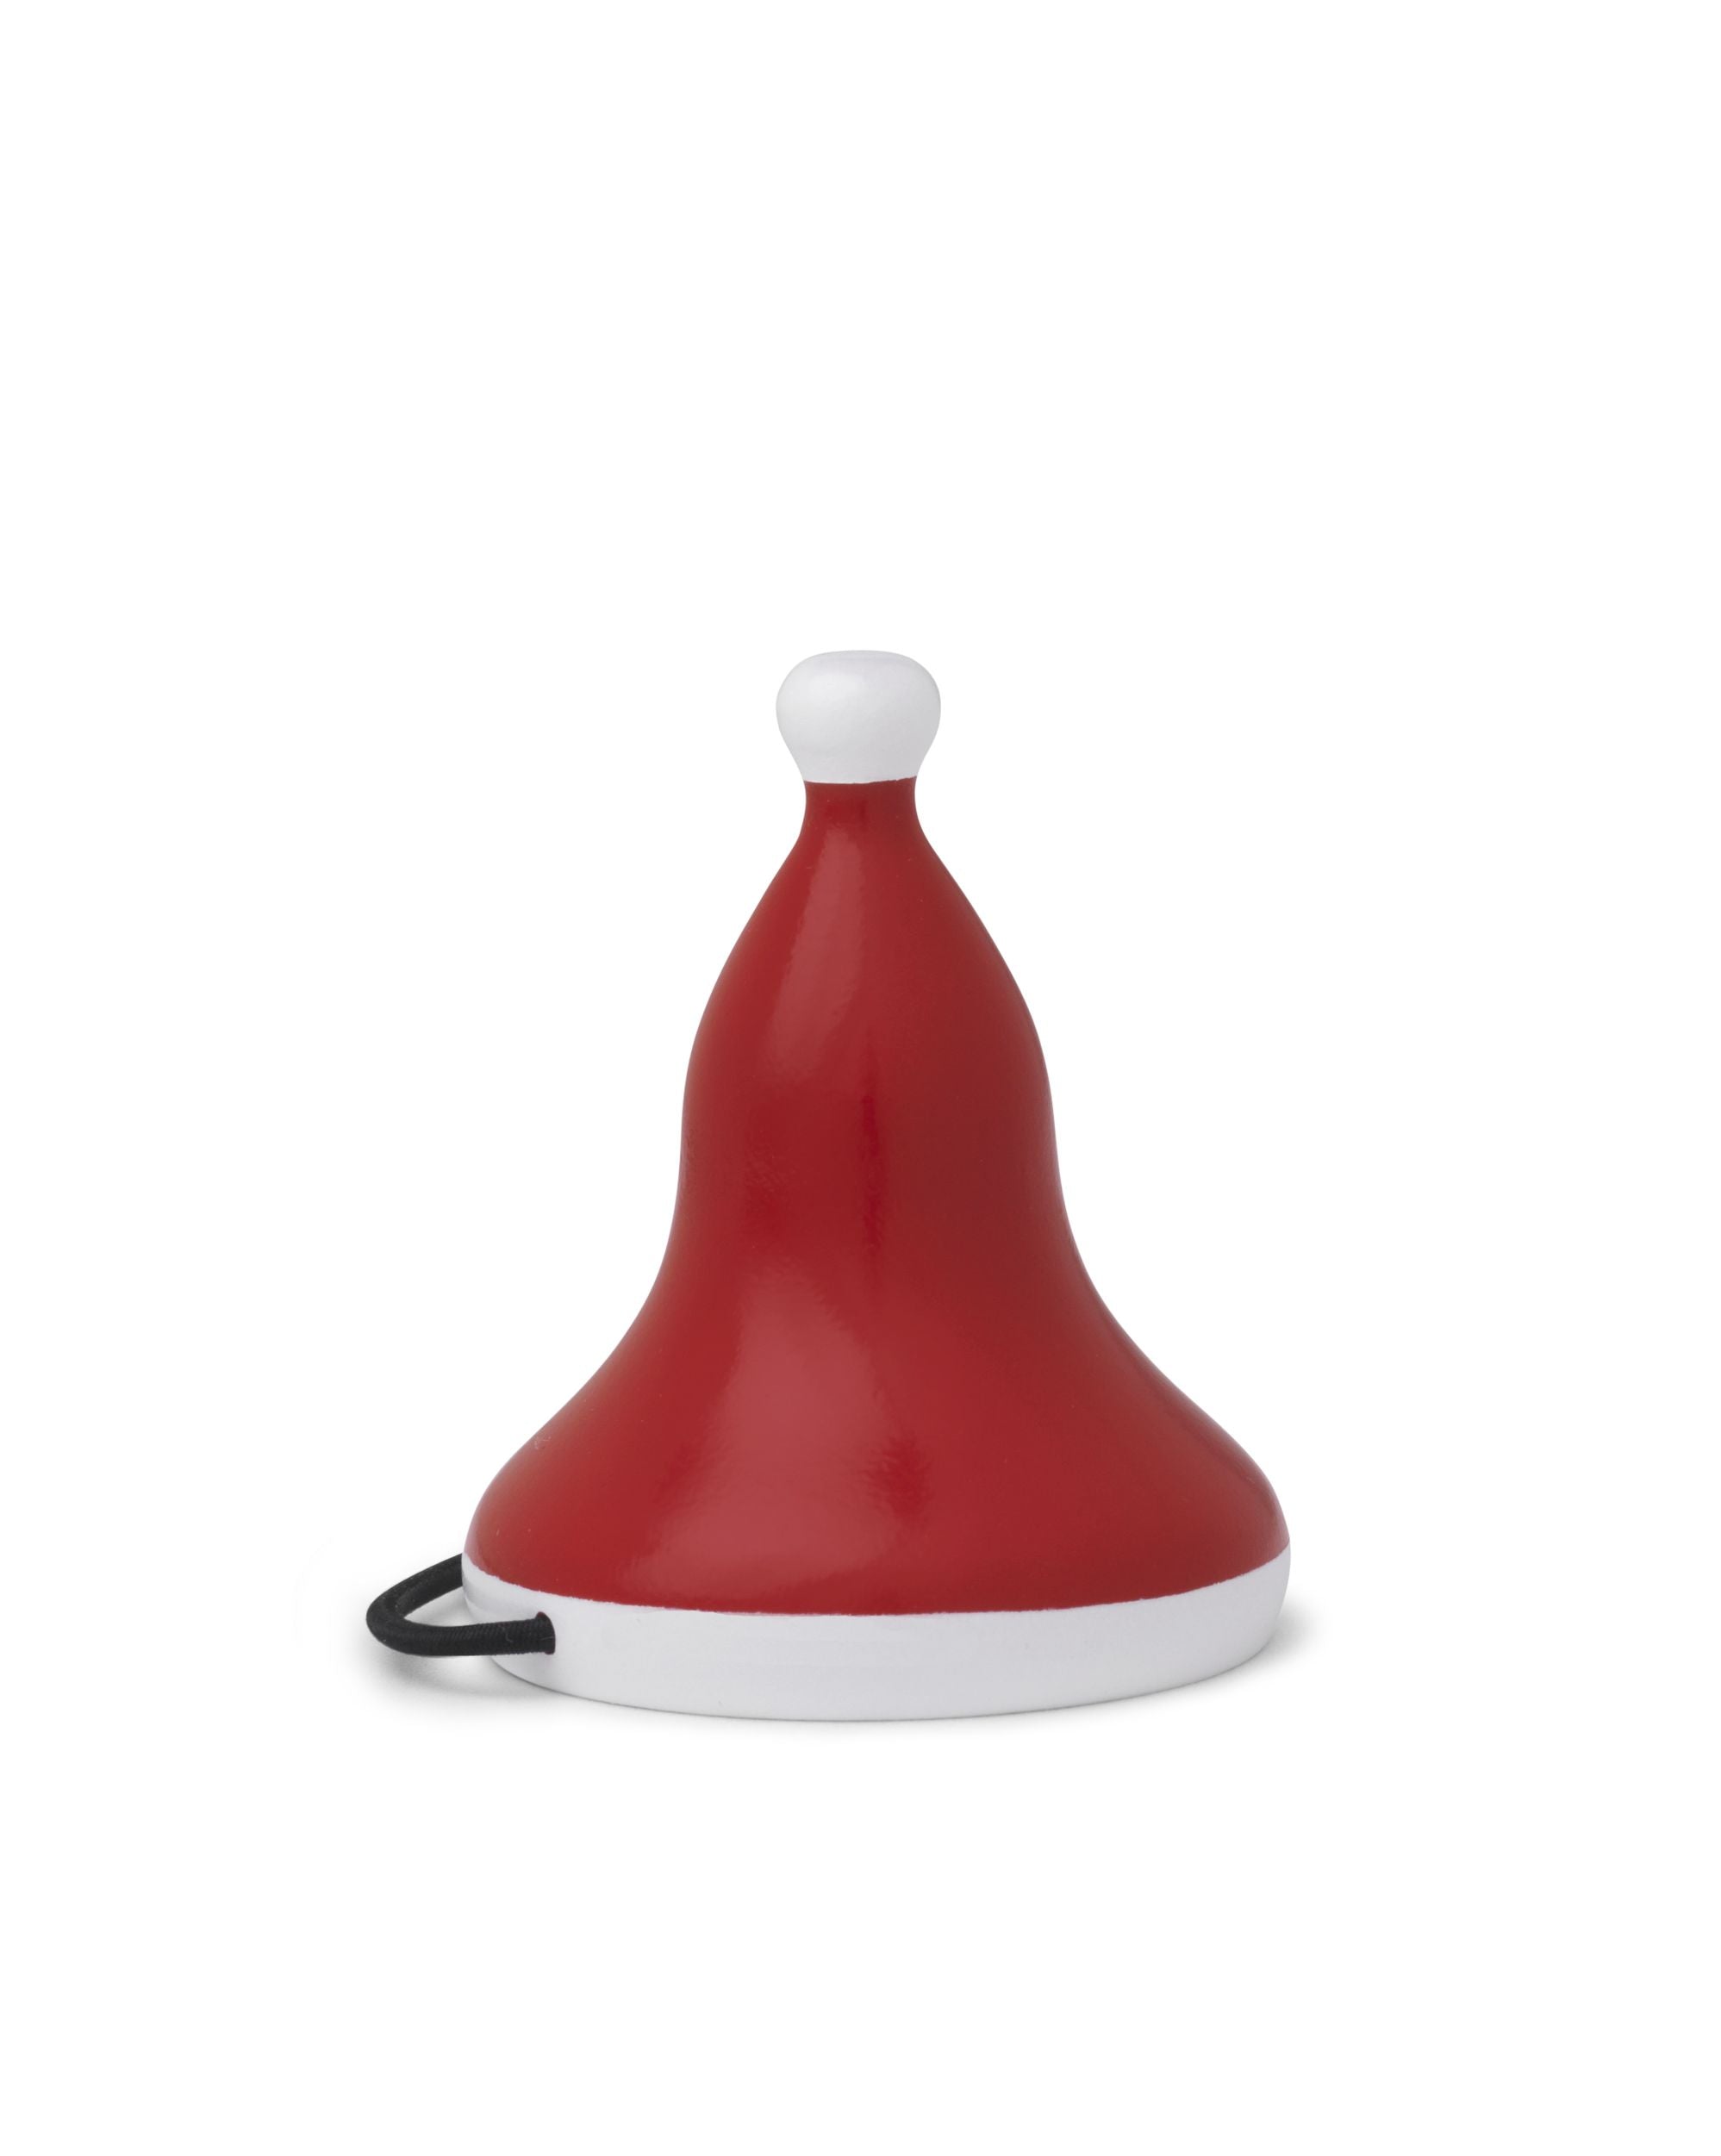 Kay Bojesen Santa's Cap Small ø5 cm rød/hvit